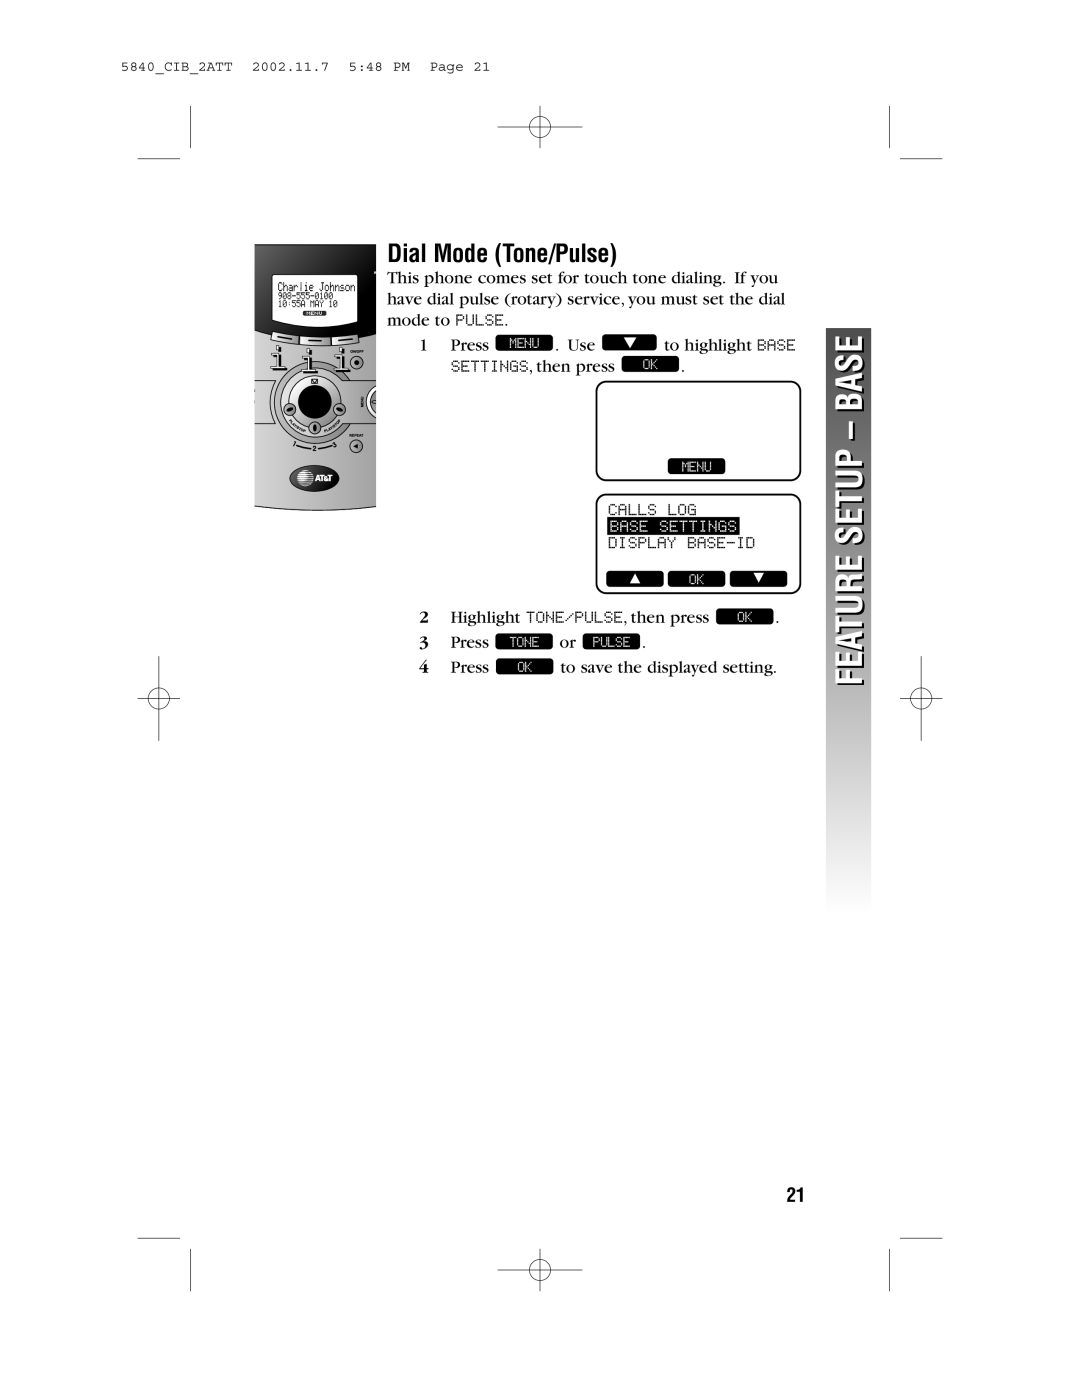 AT&T 5840 user manual Dial Mode Tone/Pulse, Feature Setup - Base, Base Settings 